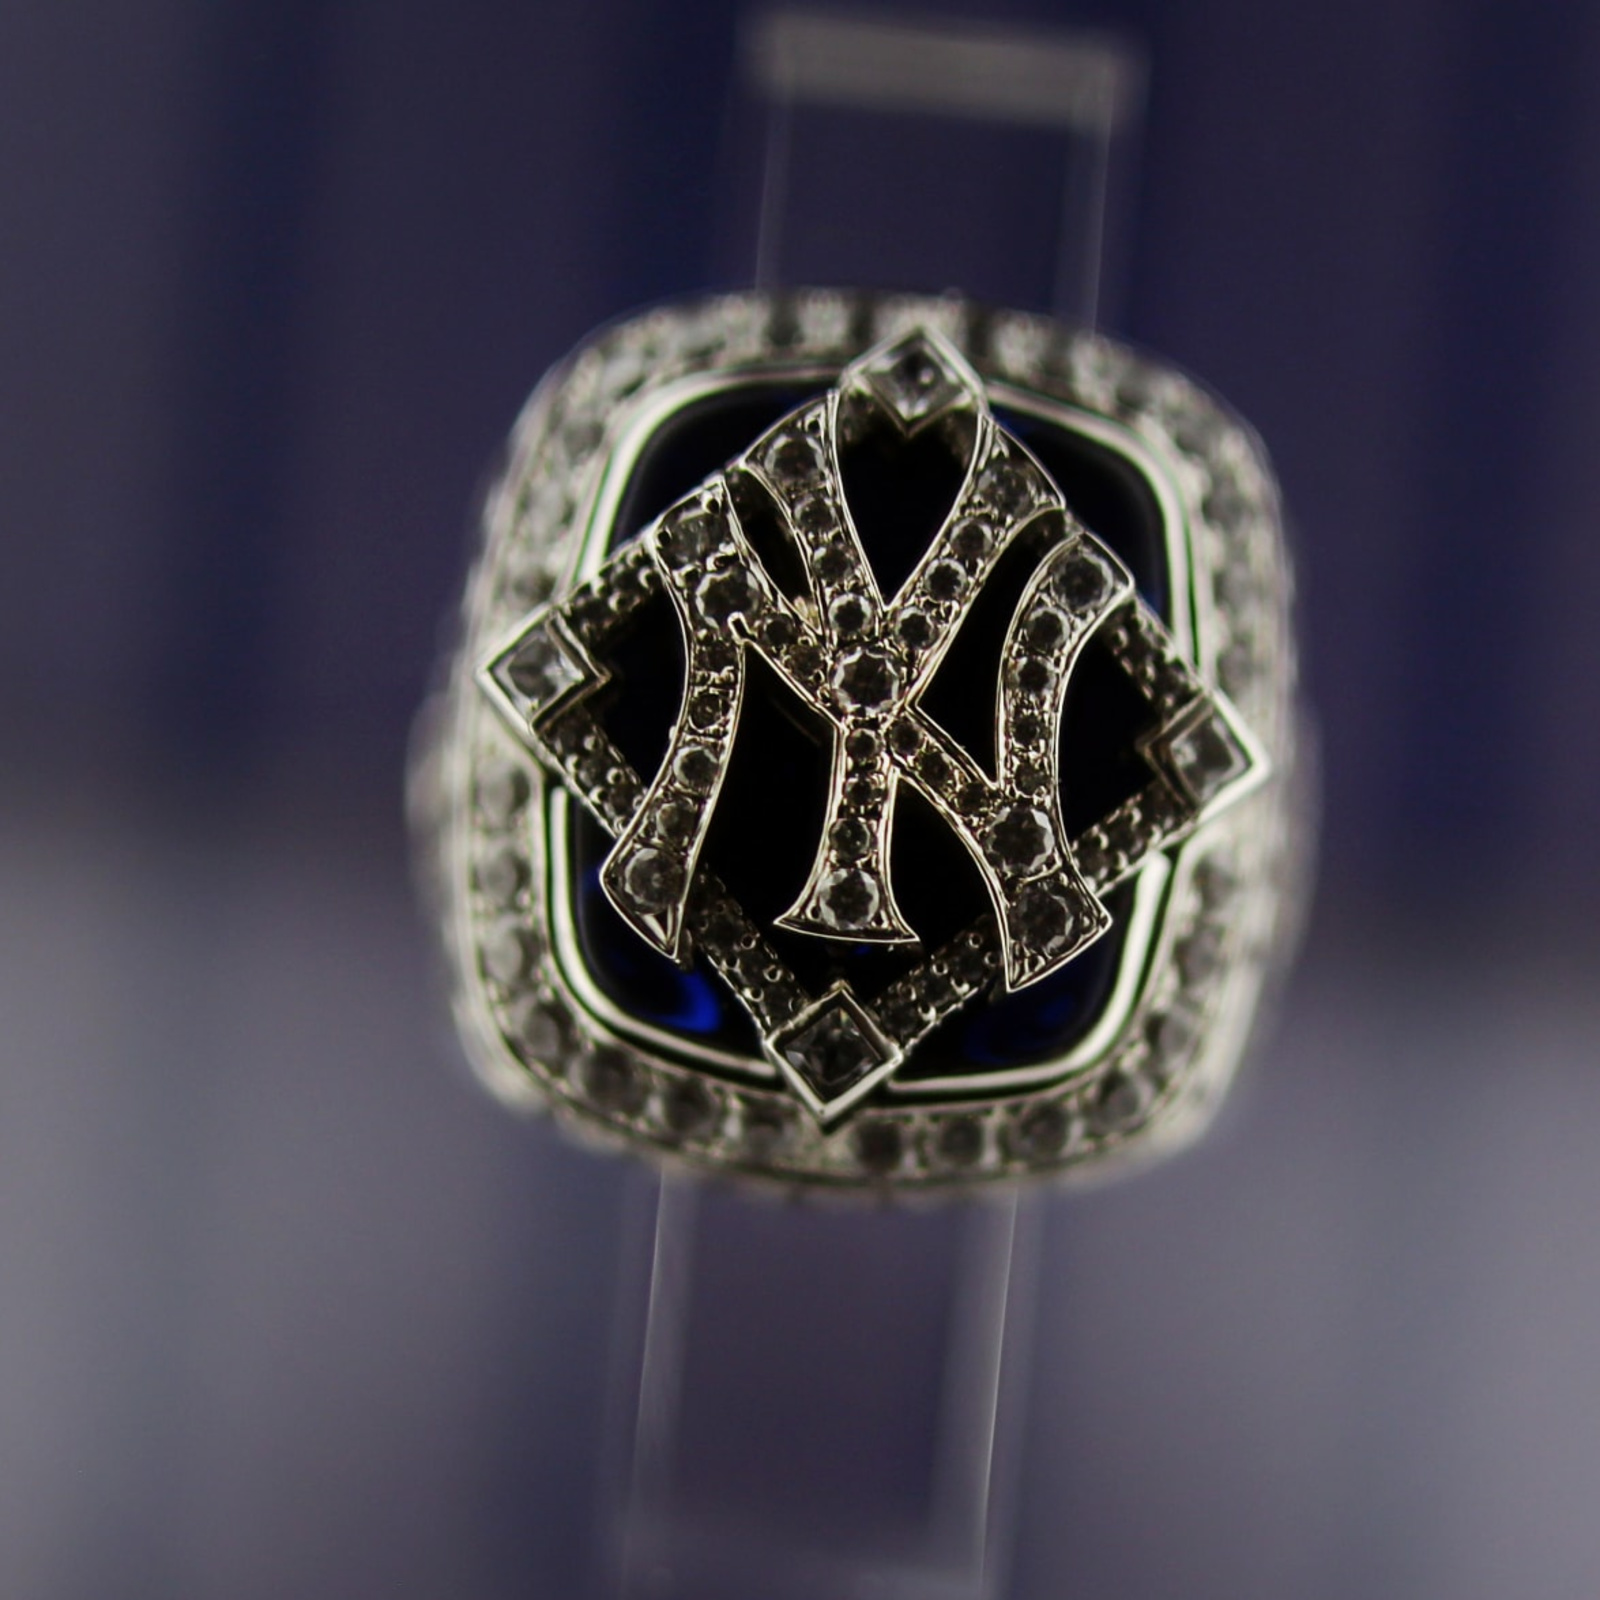 Yogi Berra World Series Rings, MVP Trophies Stolen From Museum